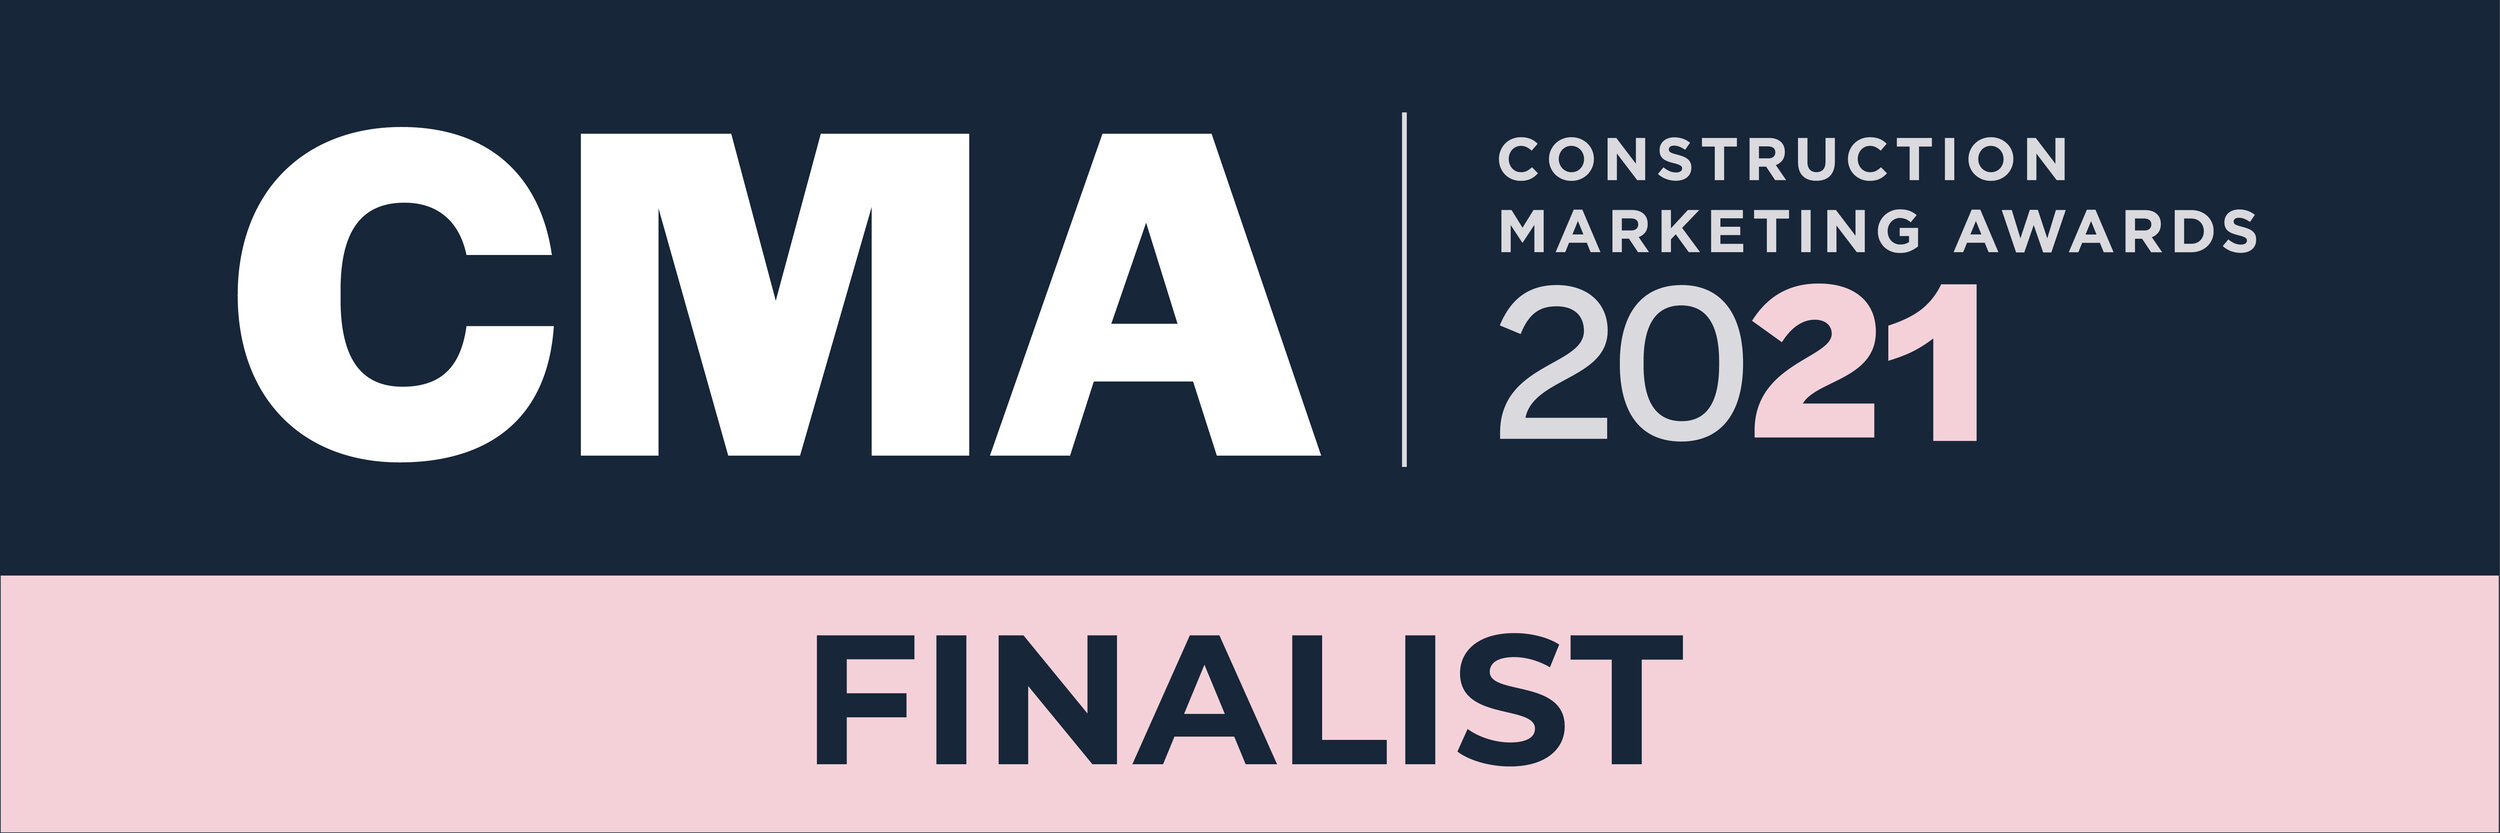 Somos Finalistas da CMA 2021!